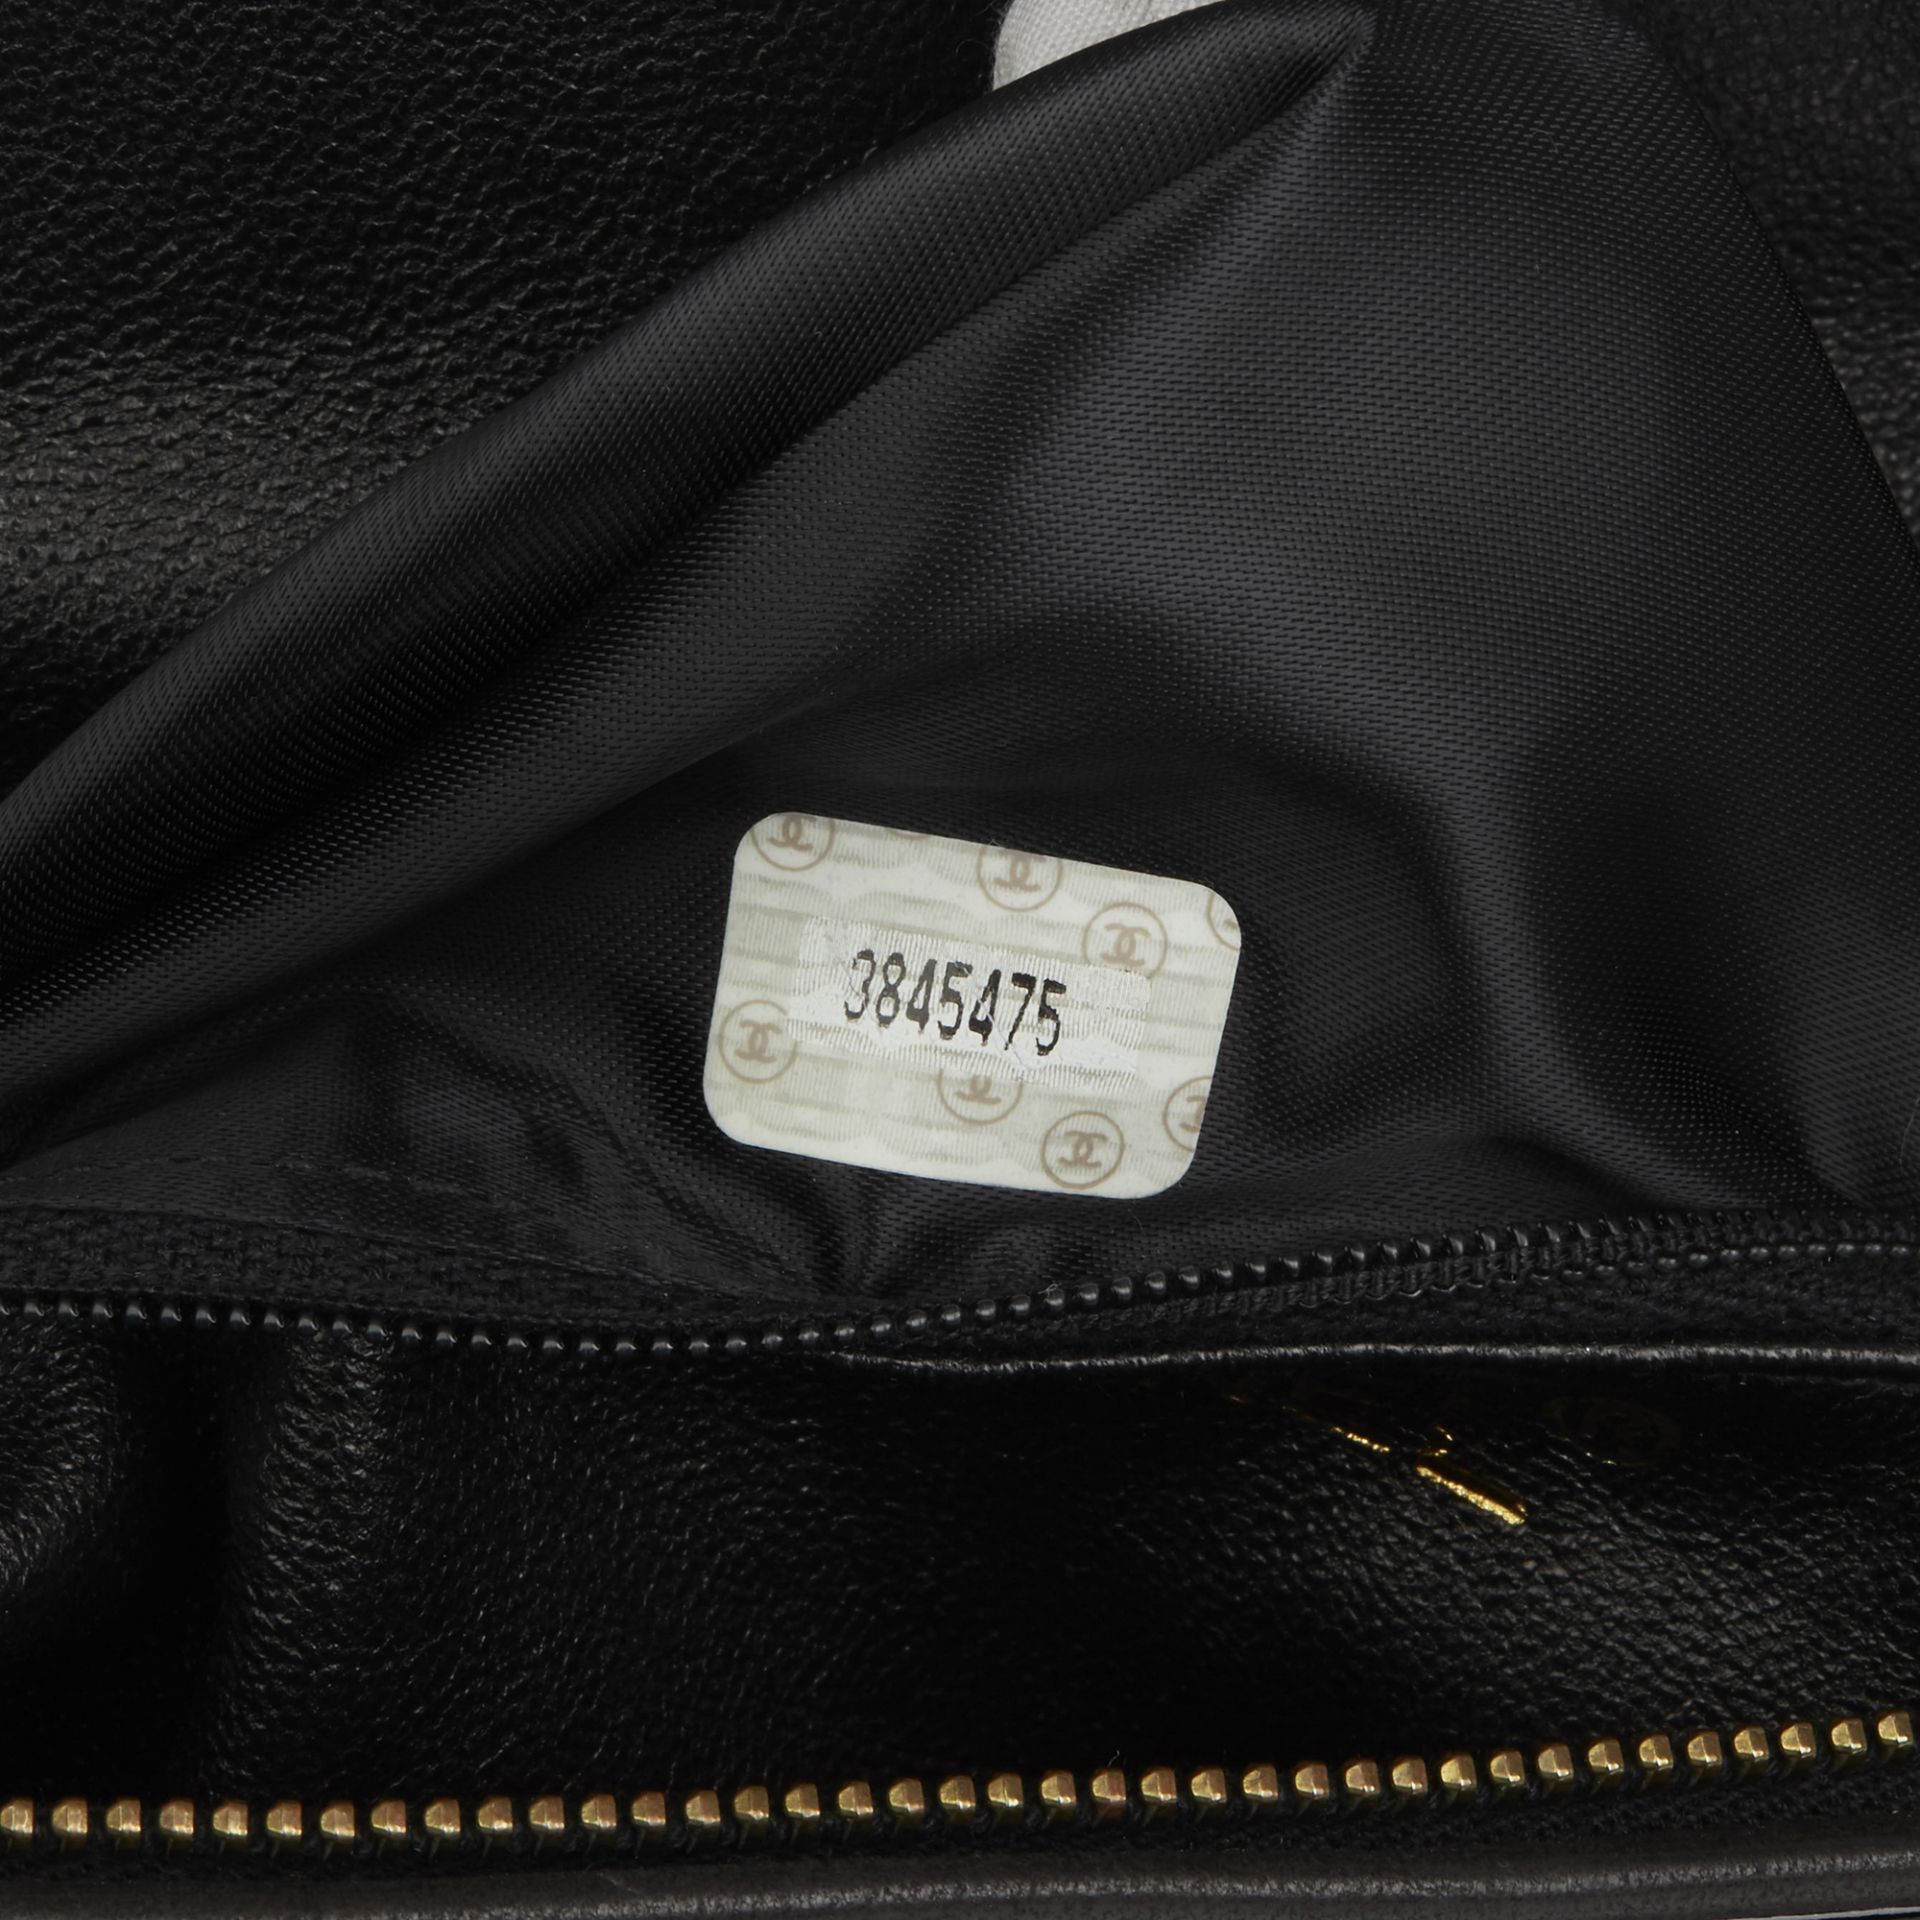 Chanel Black Quilted Patent Leather Vintage Timeless Belt Bag - Image 6 of 12